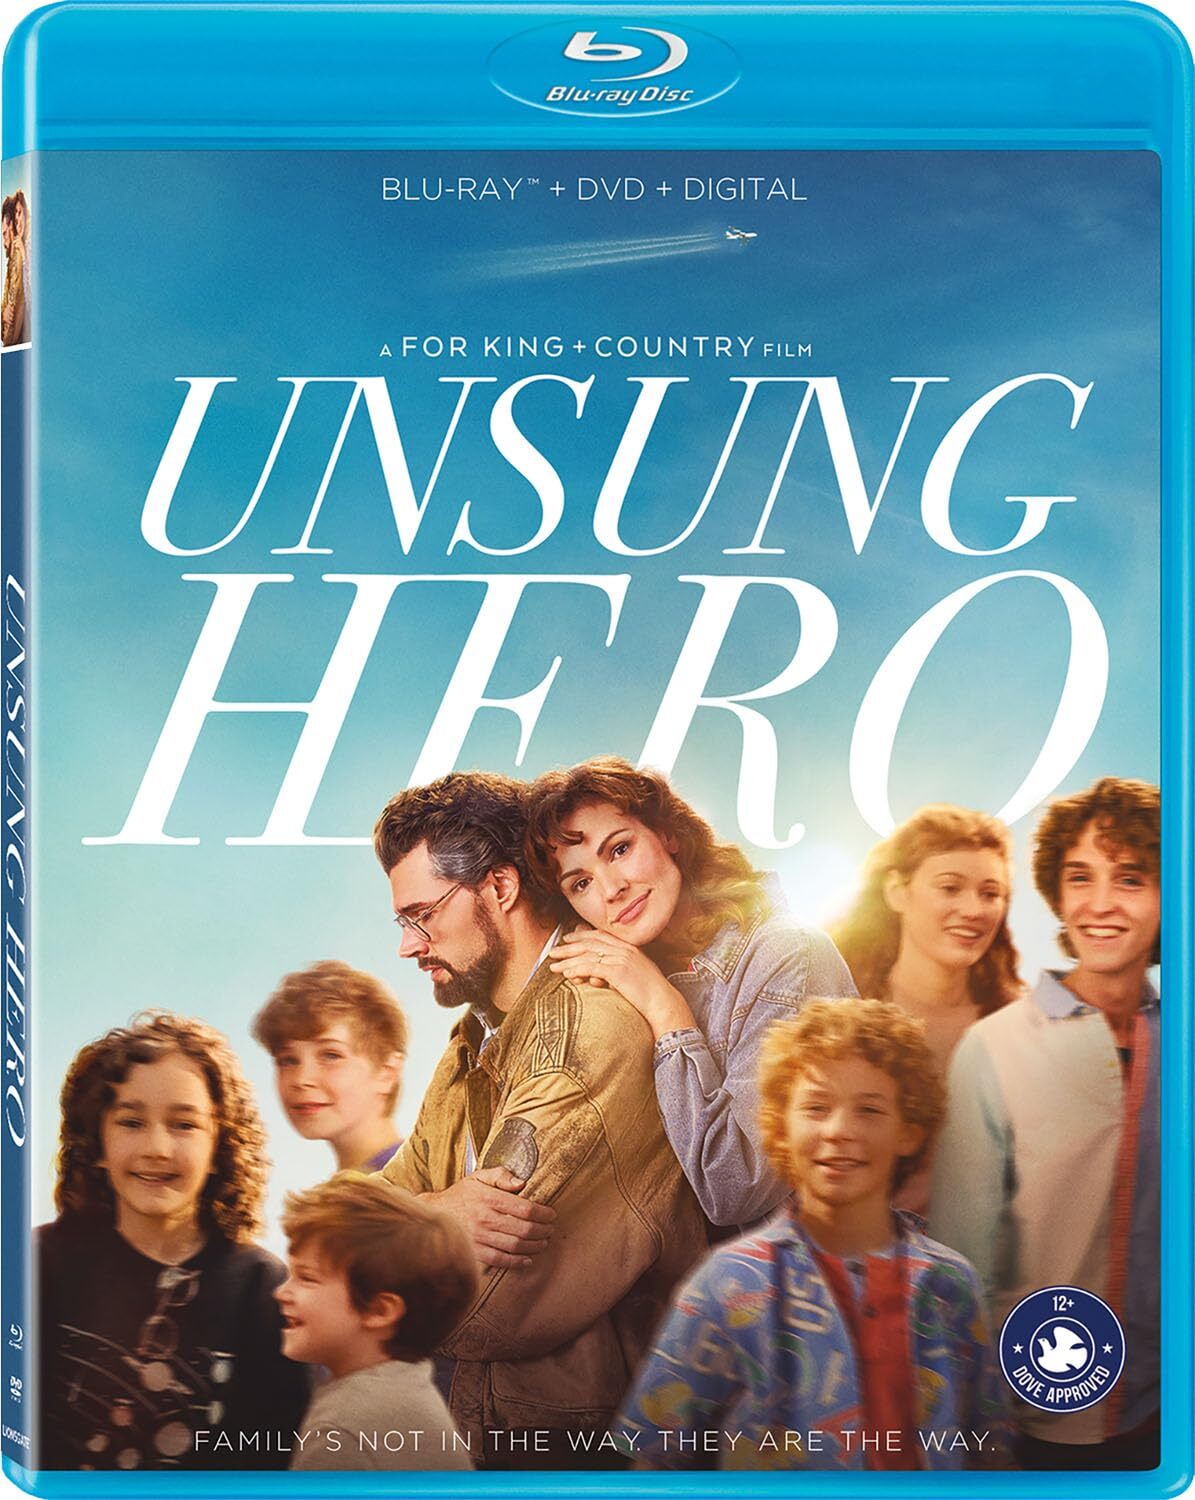 Unsung Hero Blu-ray (Blu-ray + DVD + Digital)